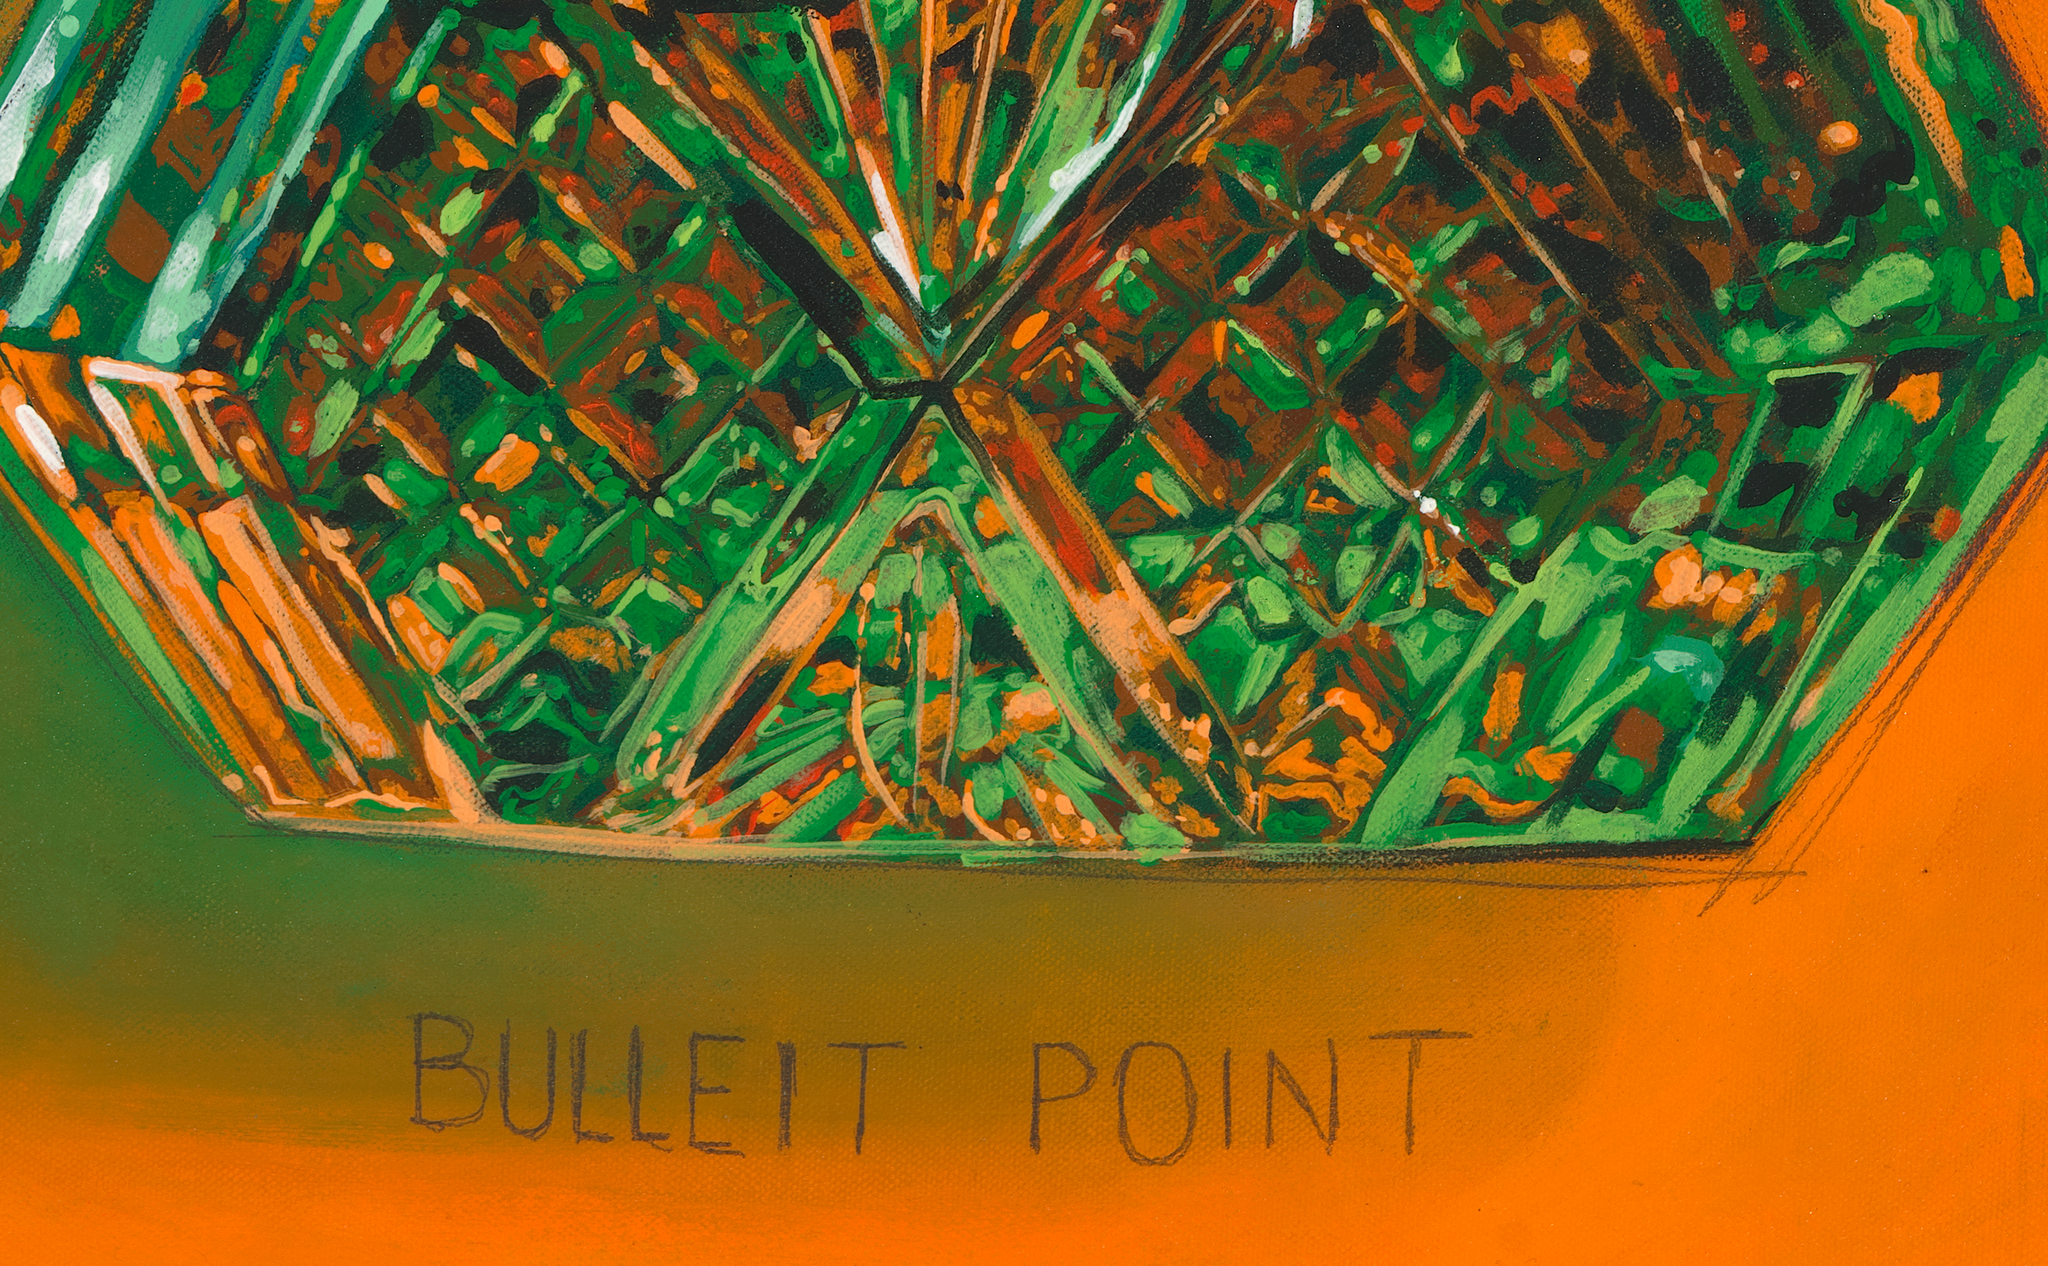 "Bulleit Point"